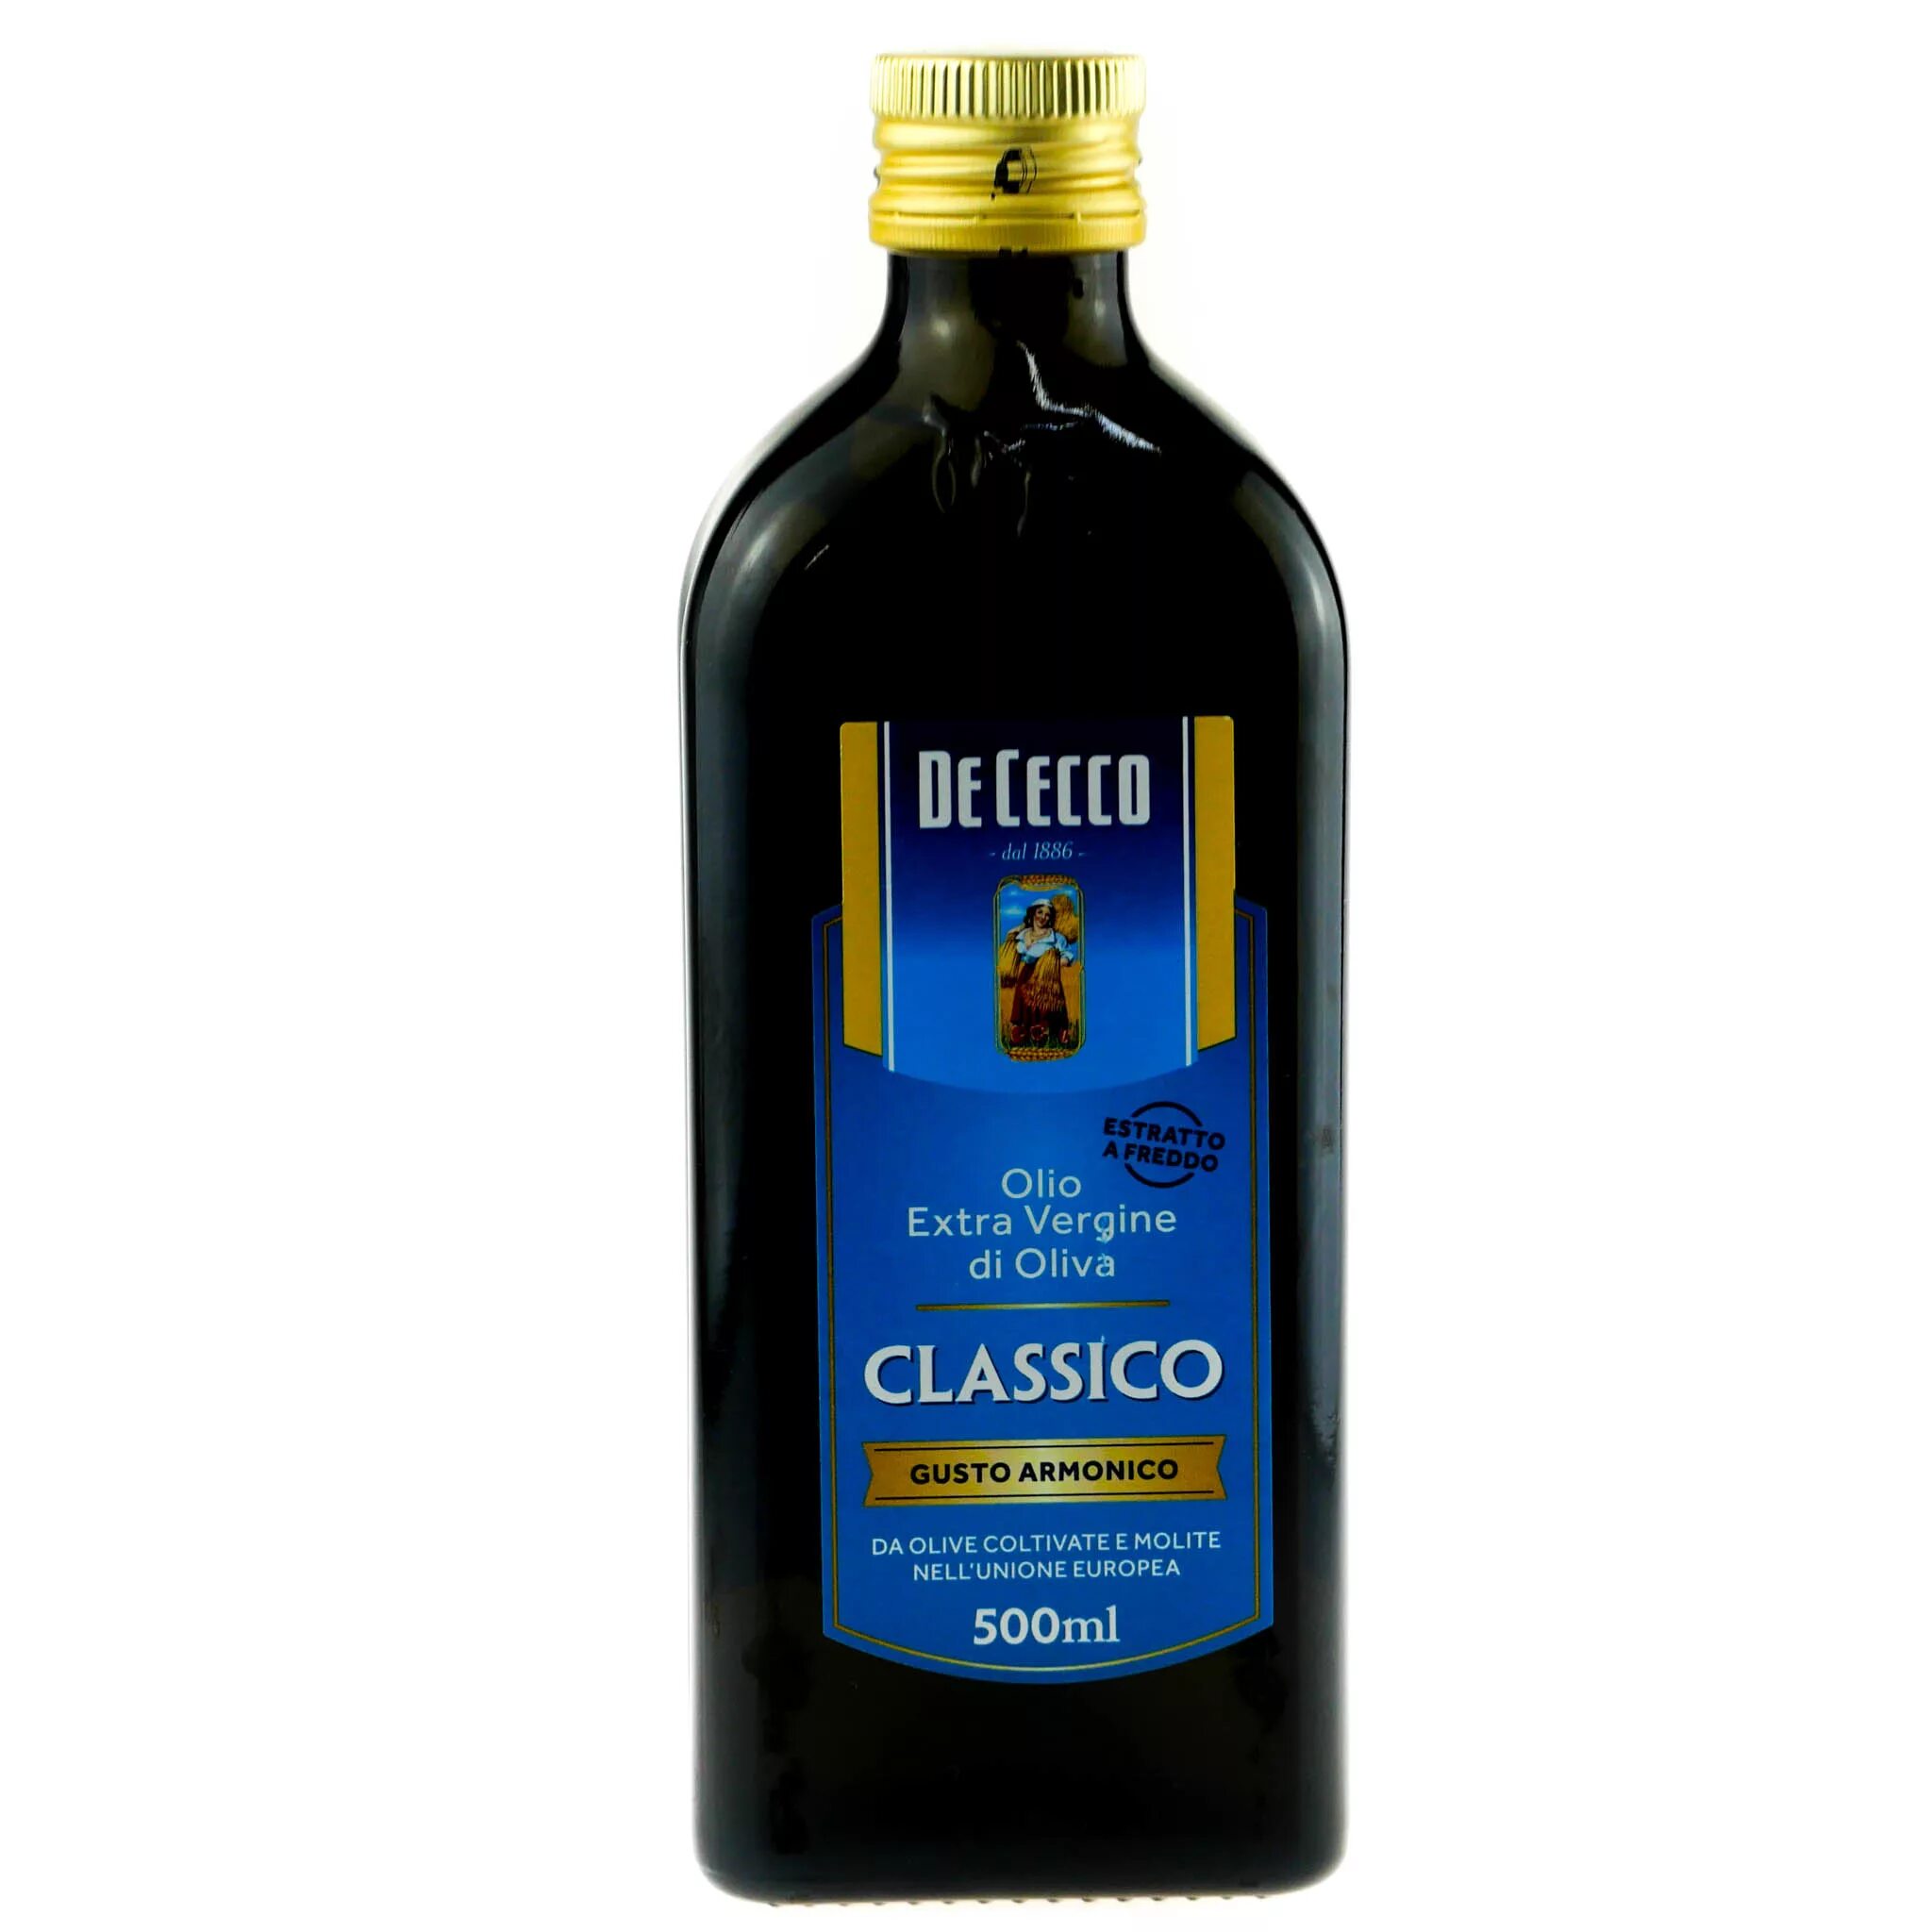 Оливковое масло 1 отжима. Масло оливковое de Cecco, 500 мл.. De Cecco оливковое нерафинированное 500мл. Масло оливковое de Cecco Extra vergine, 0,5л. Оливковое масло de Cecco Classico 500мл маркировка.